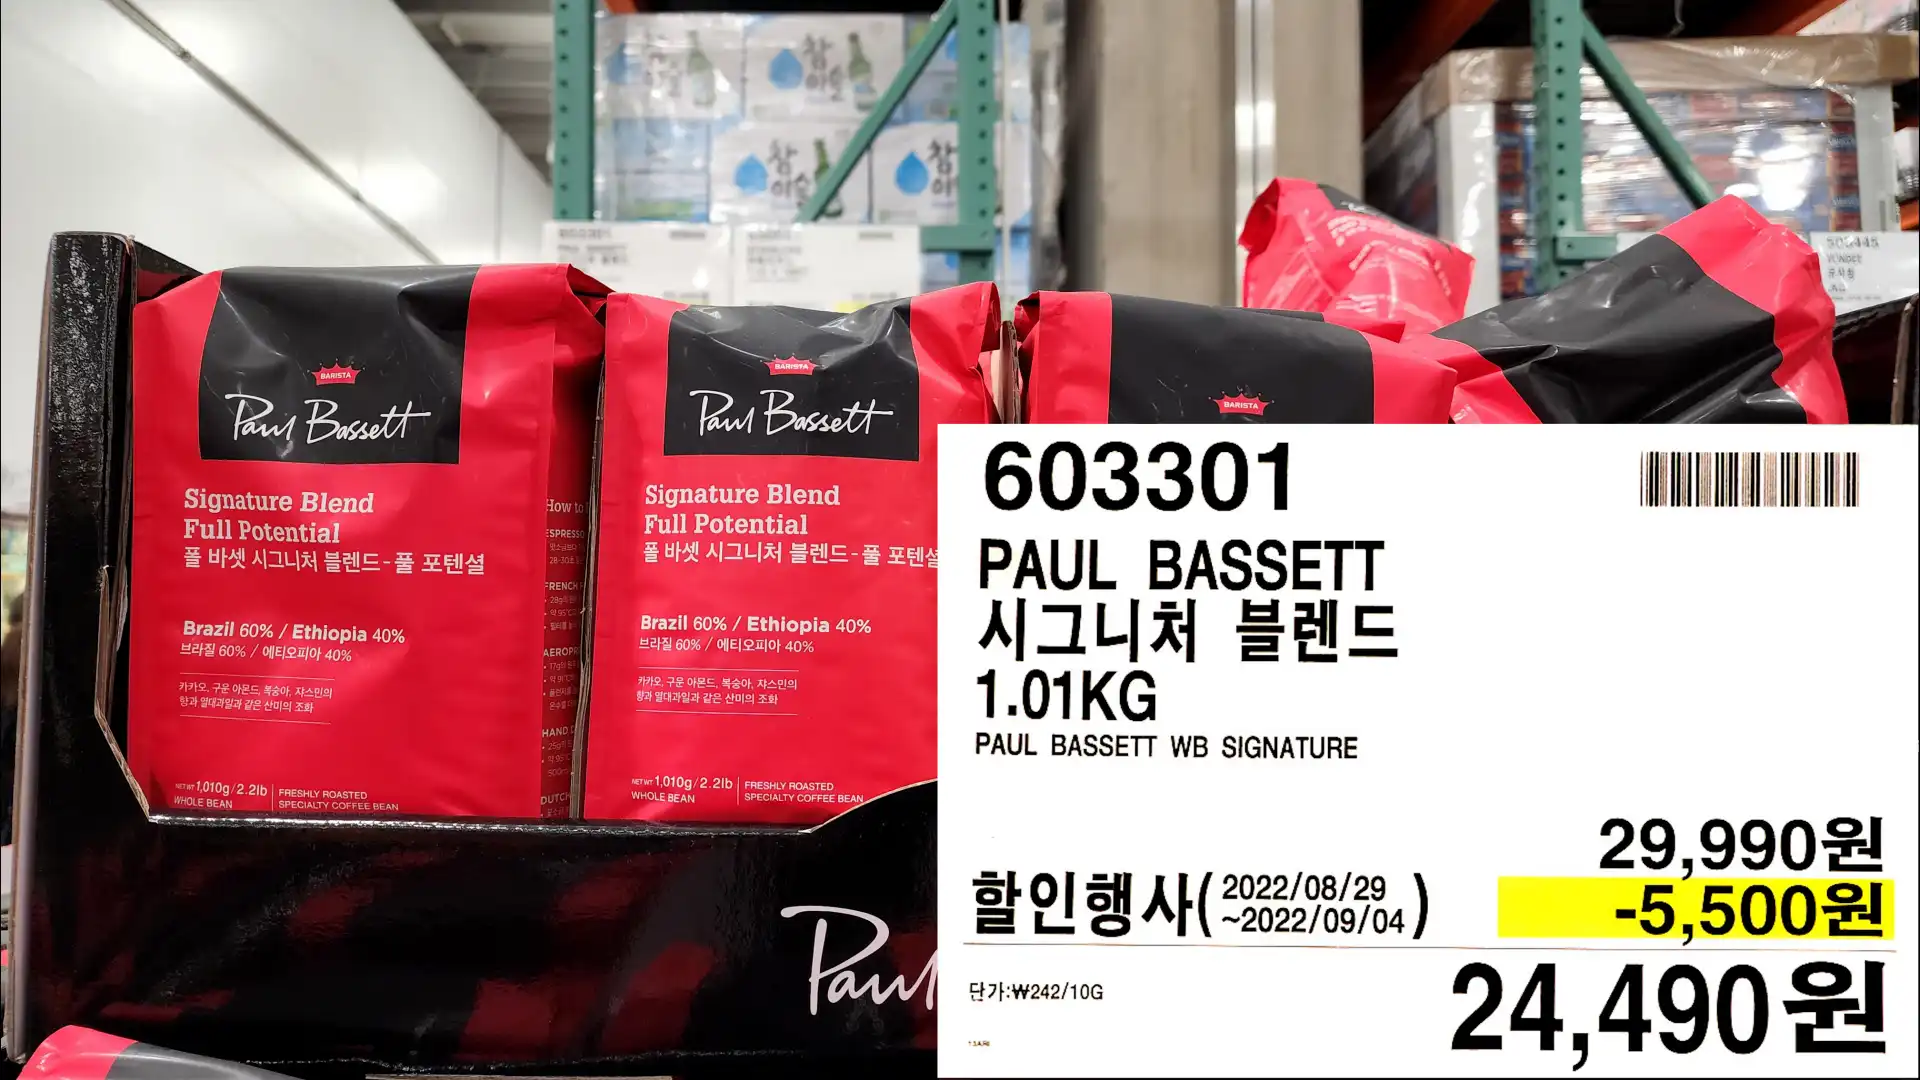 PAUL BASSETT
시그니처 블렌드
1.01KG
PAUL BASSETT WB SIGNATURE
24,490원